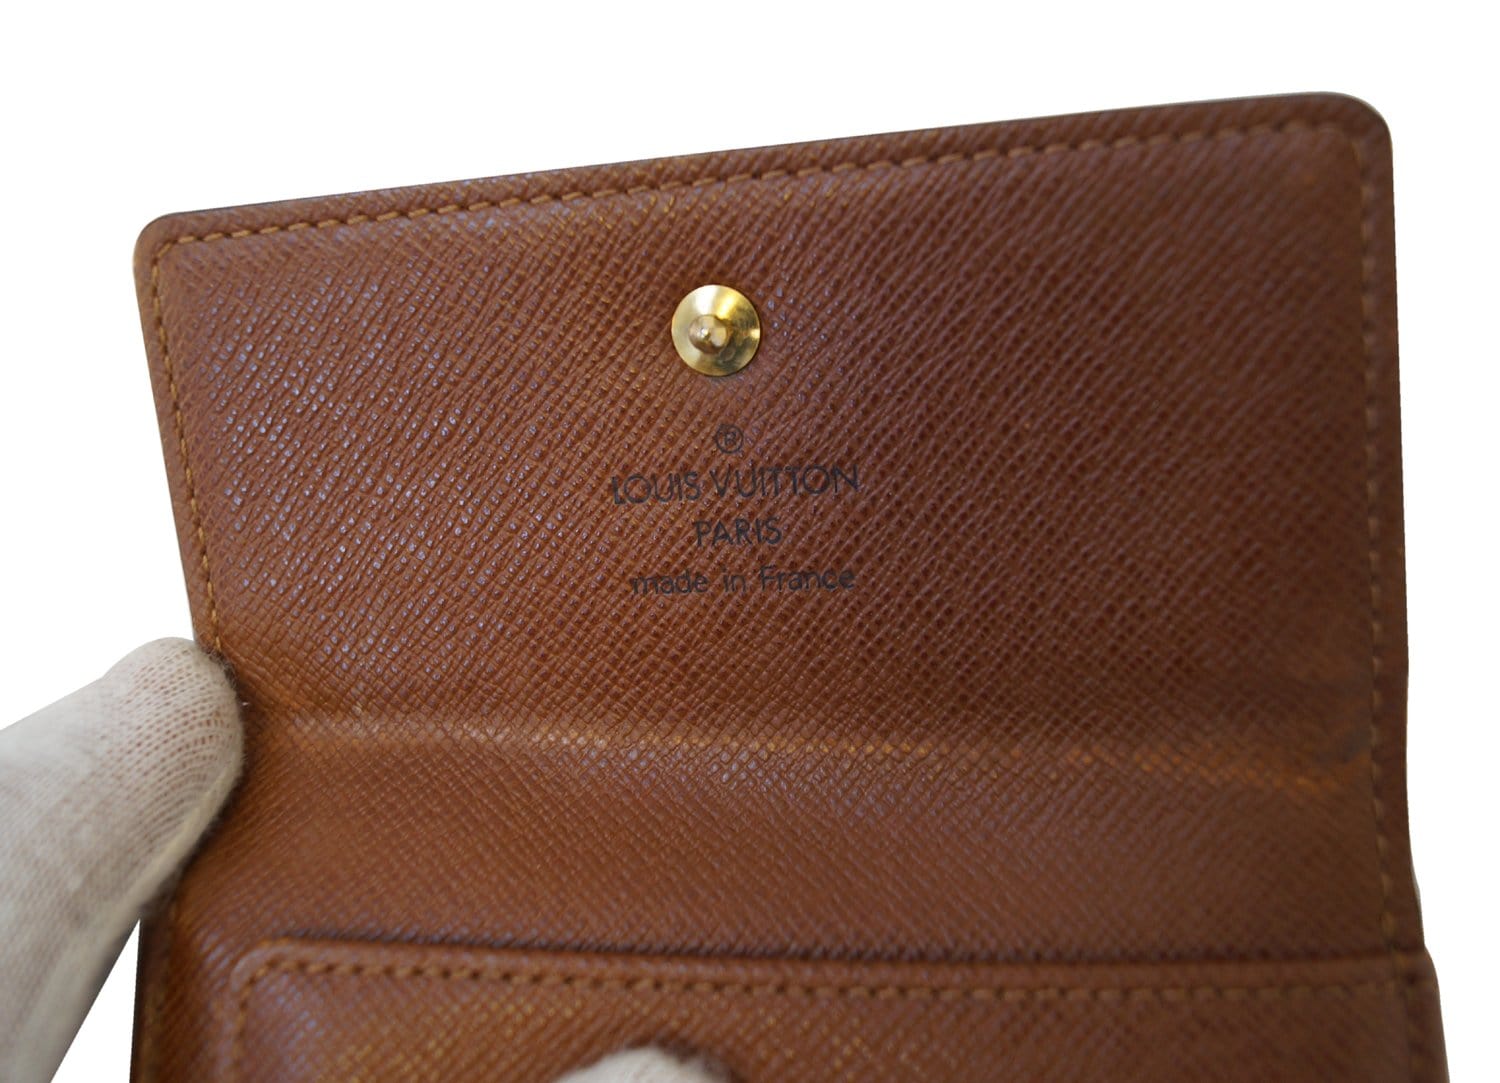 Louis Vuitton Elise Wallet for Sale in Saint Paul, MN - OfferUp